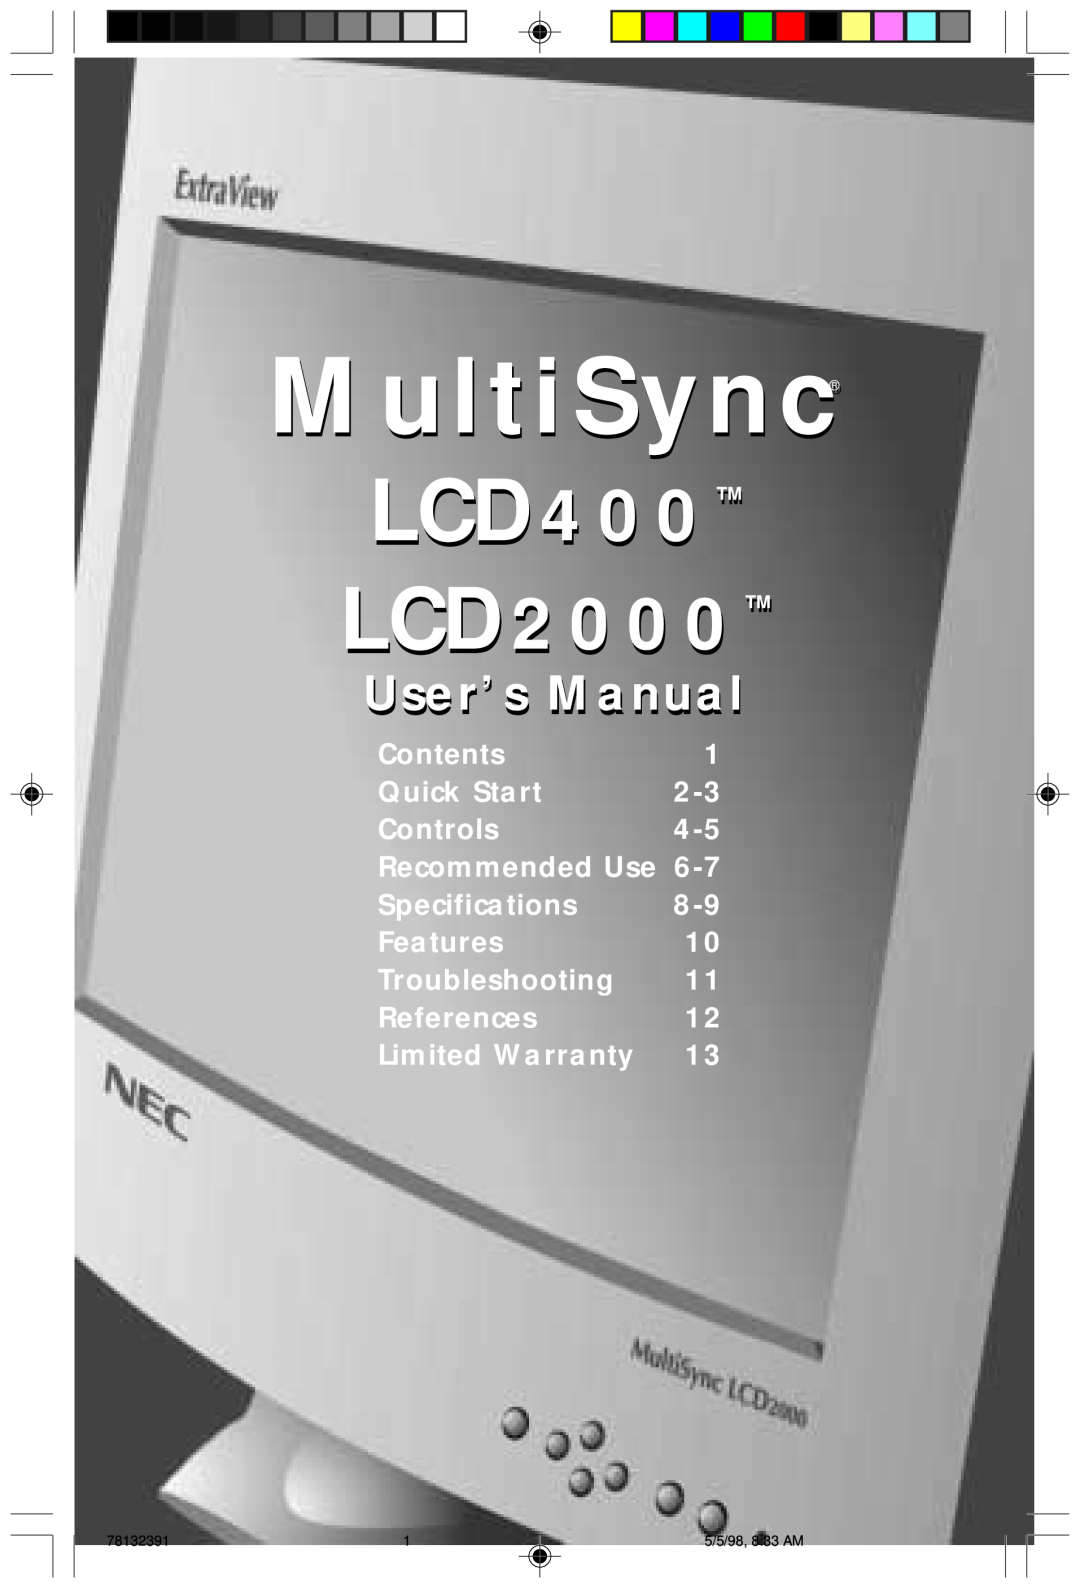 NEC LCD2000 user manual MultiSync, LCD400, User’s Manual 